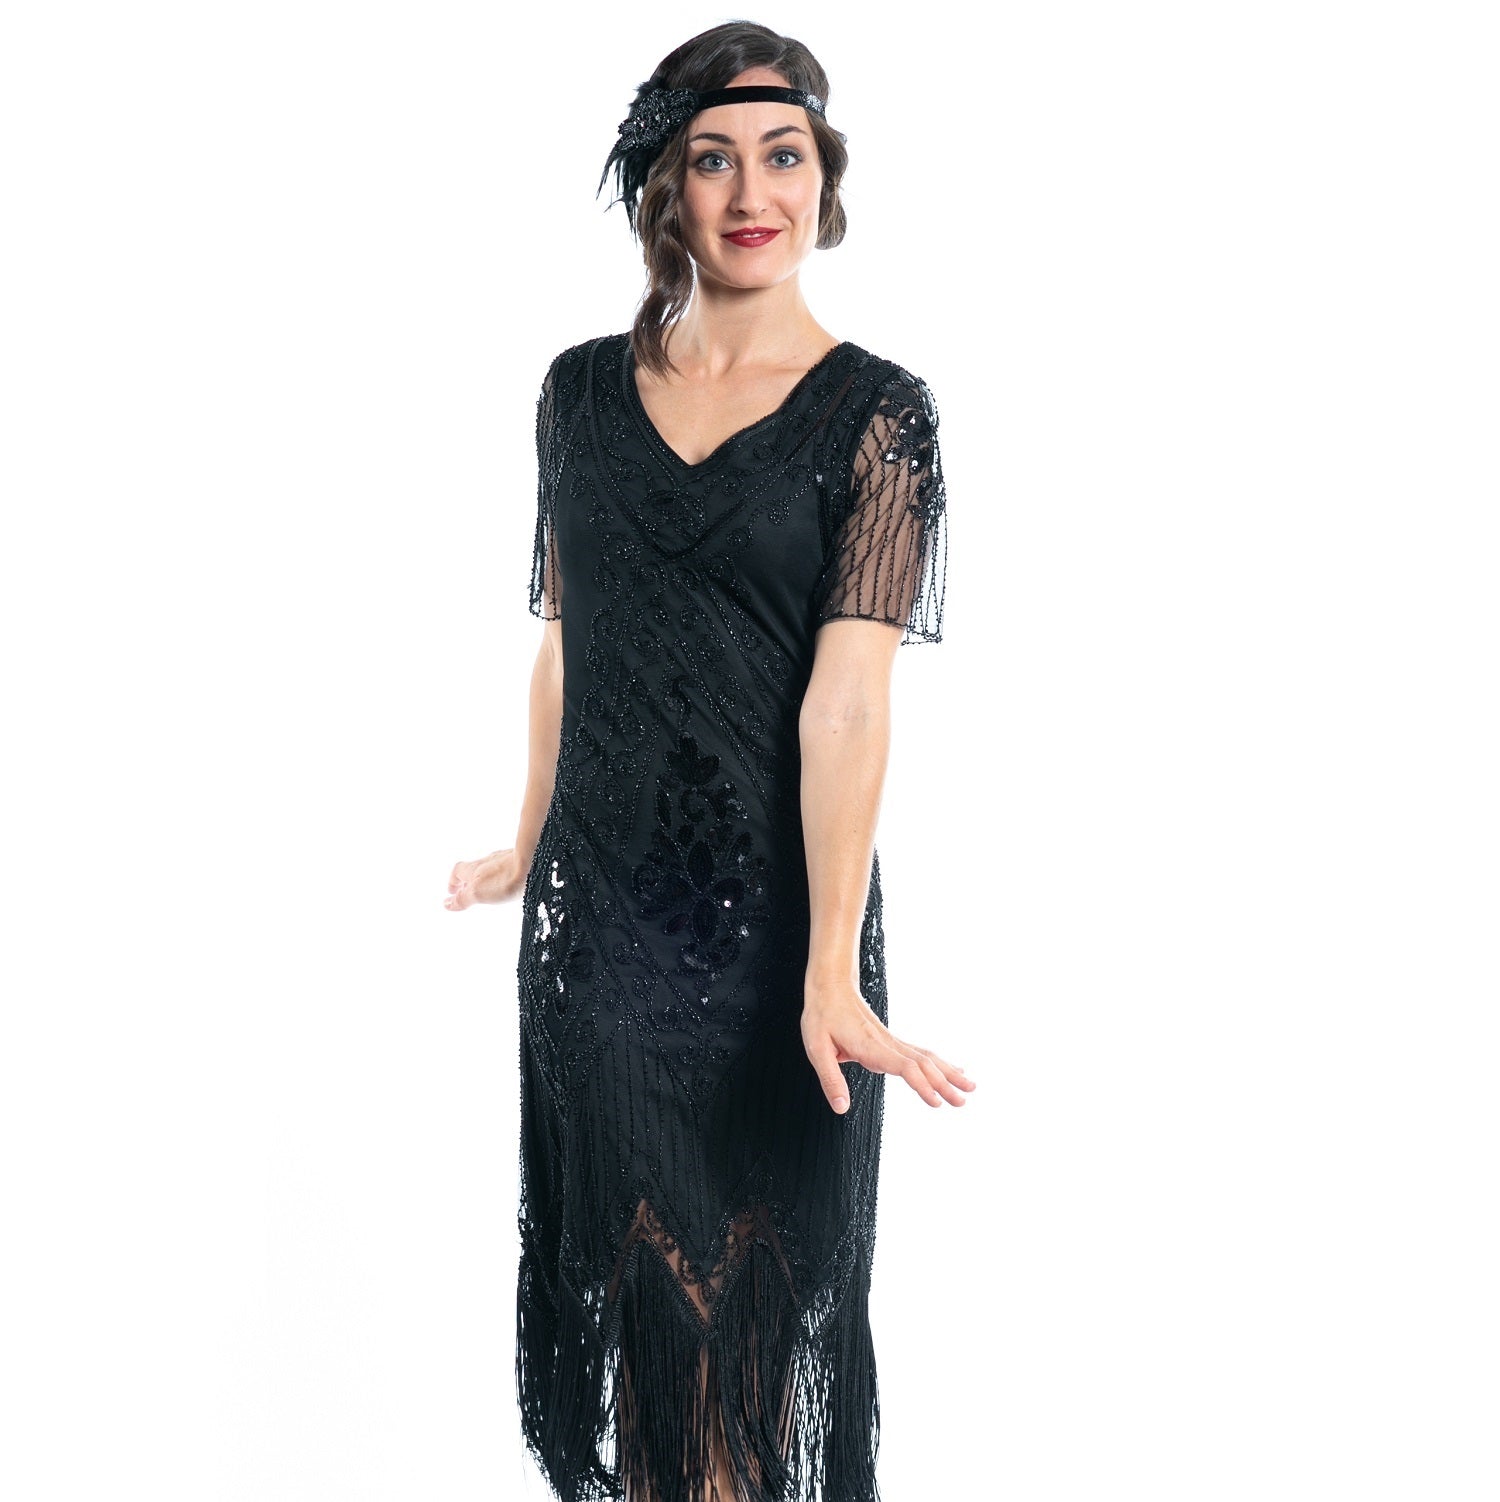 Plus Size Women's Black Flapper Dress